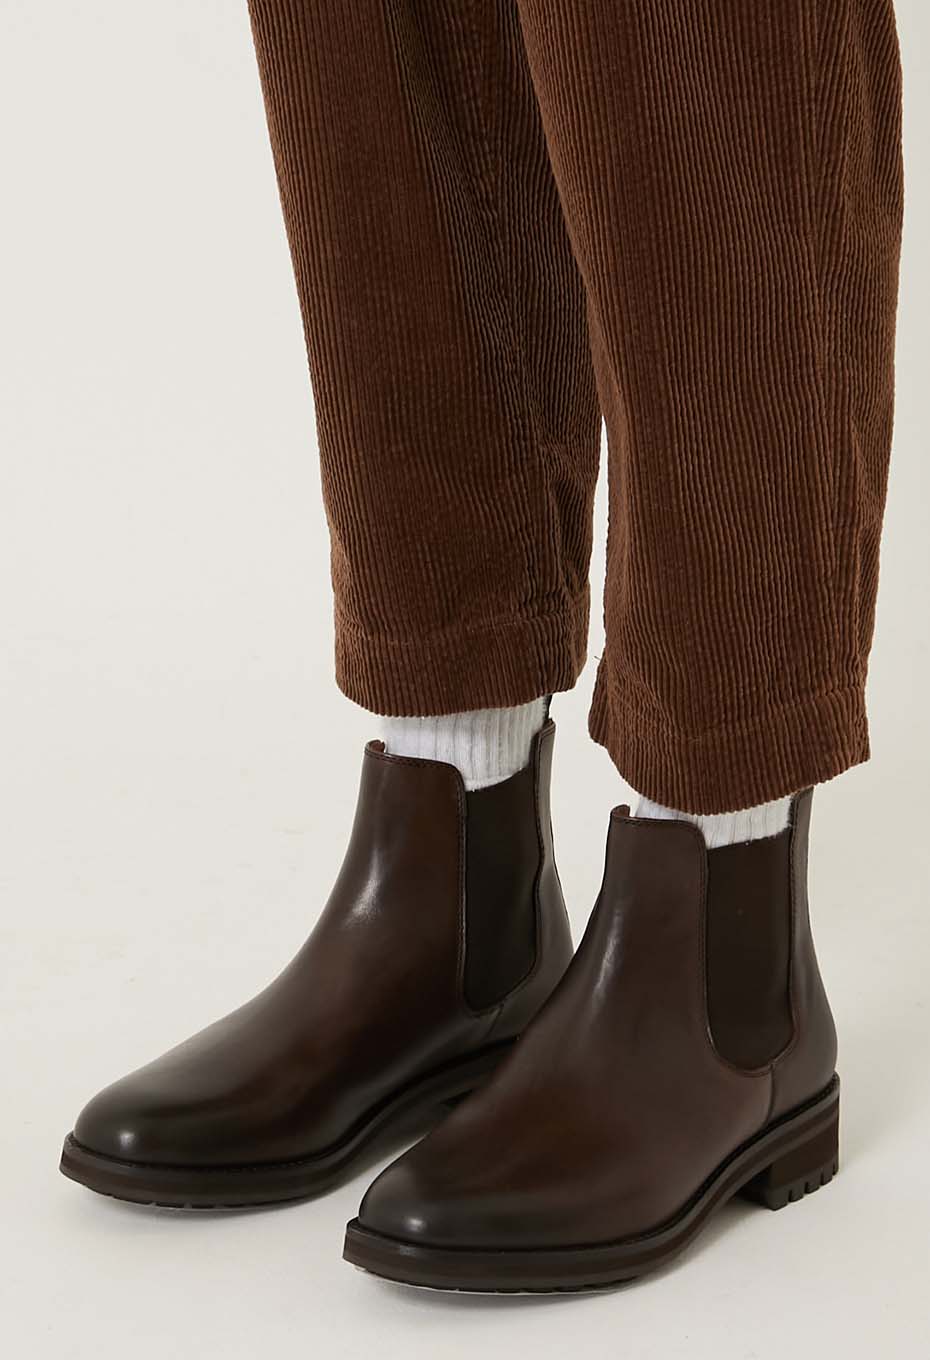 POLO RALPH LAUREN|Boots|POLO RALPH LAUREN Bryson Chelsea Boots Calf Leather